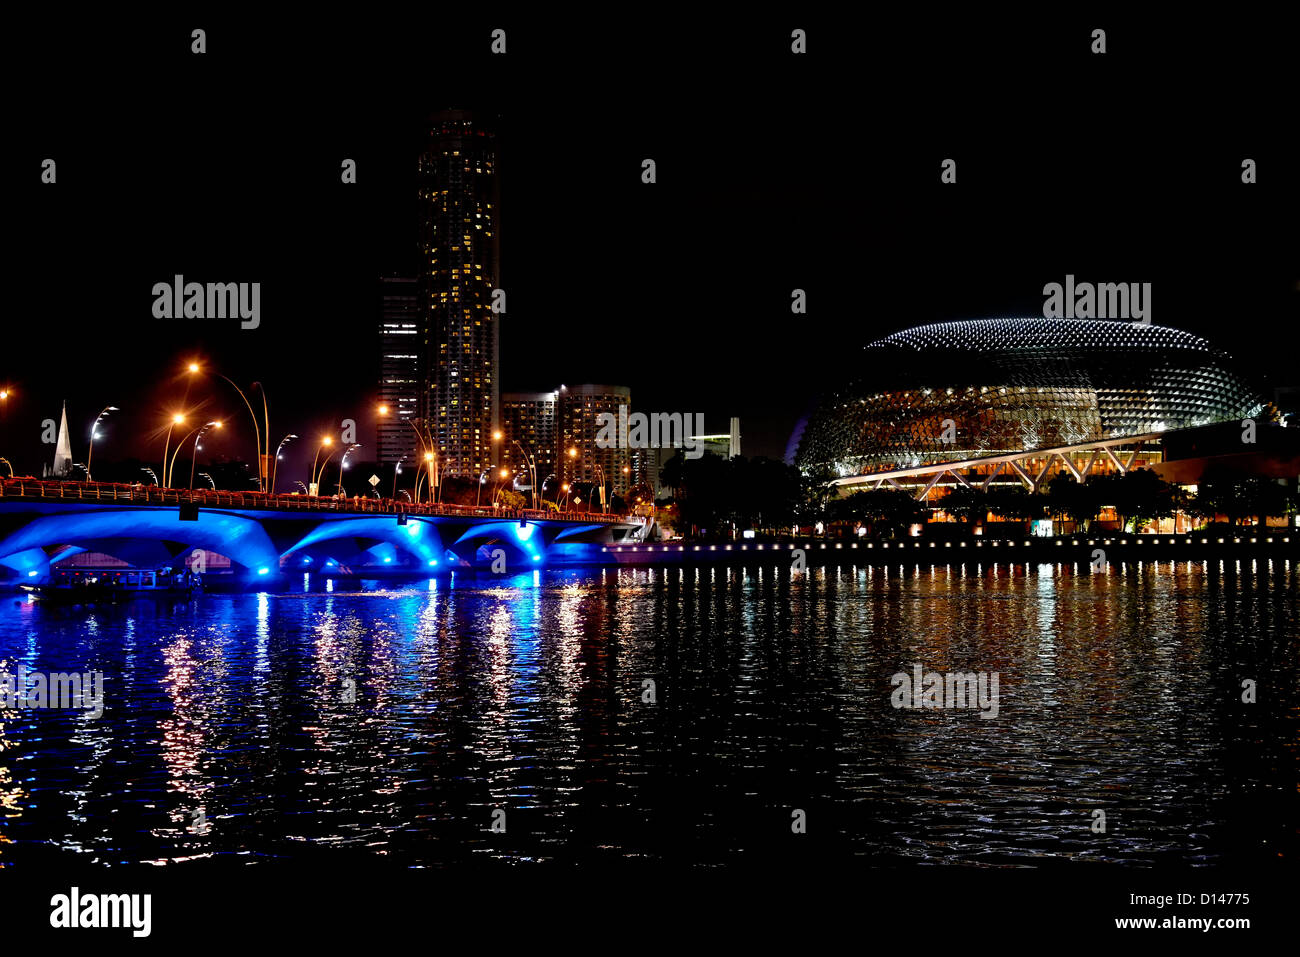 Singapore at night with the Esplanade Opera House, illuminated Esplanade Bridge and swissotel Stamford in the background. Stock Photo